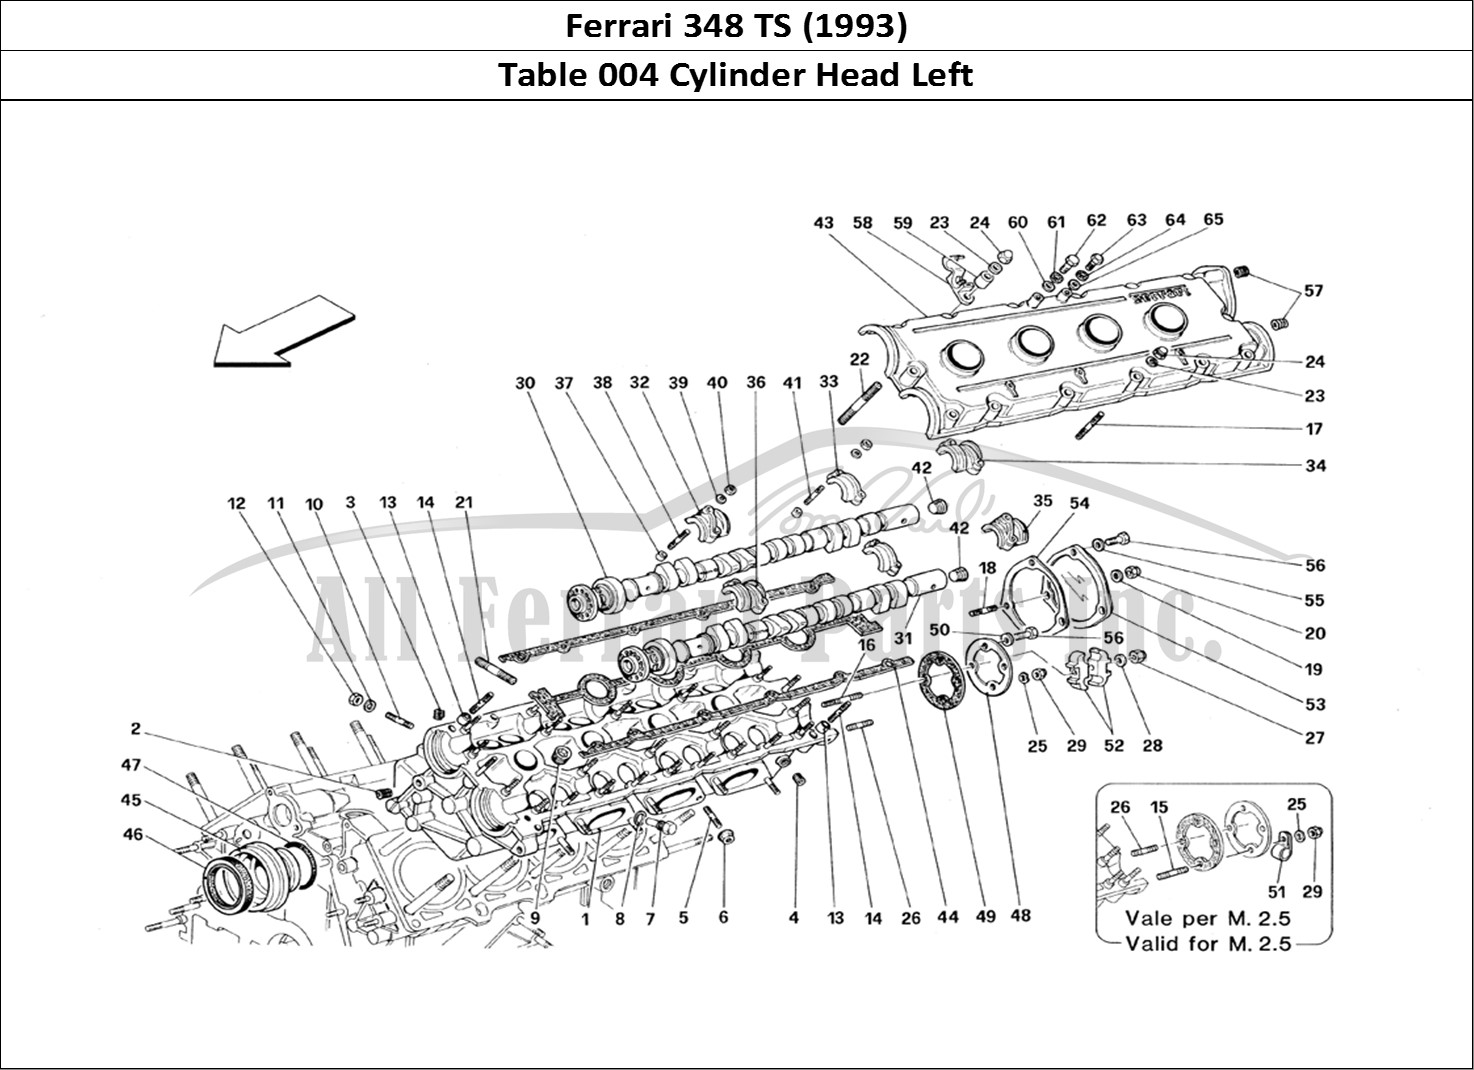 Ferrari Parts Ferrari 348 TB (1993) Page 004 L.H. Cylinder Head